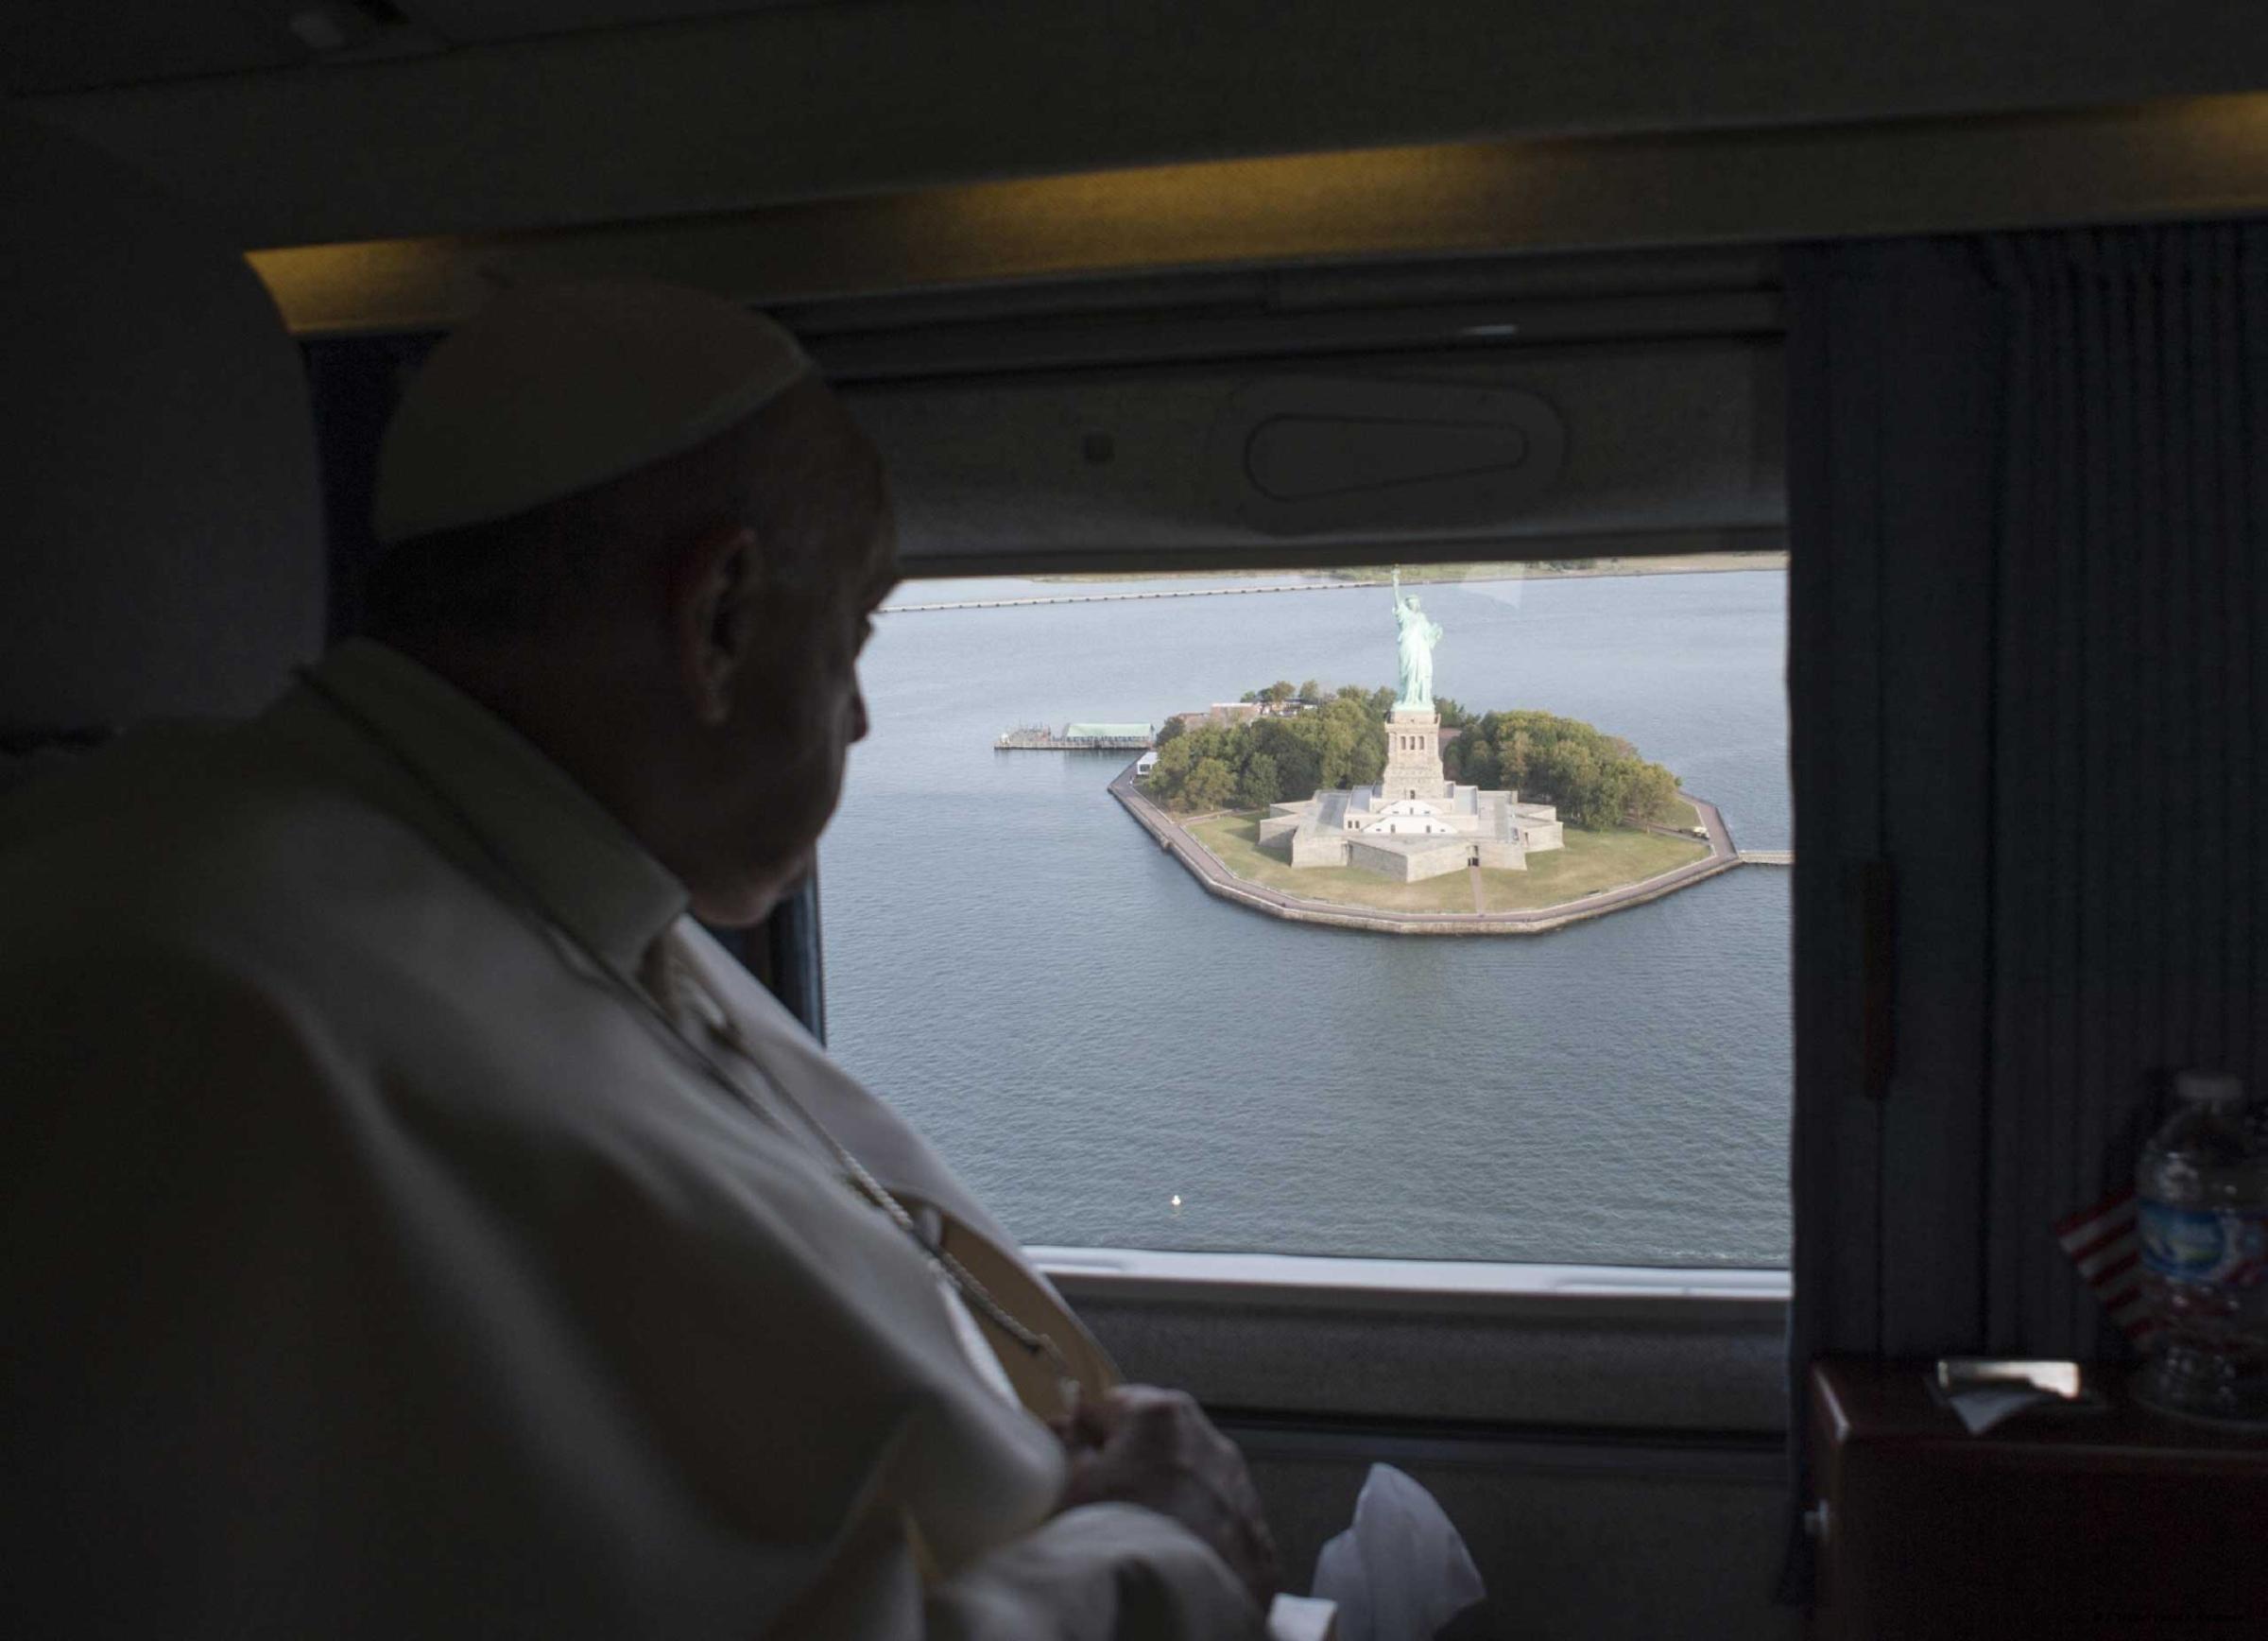 Pope Francis US visit